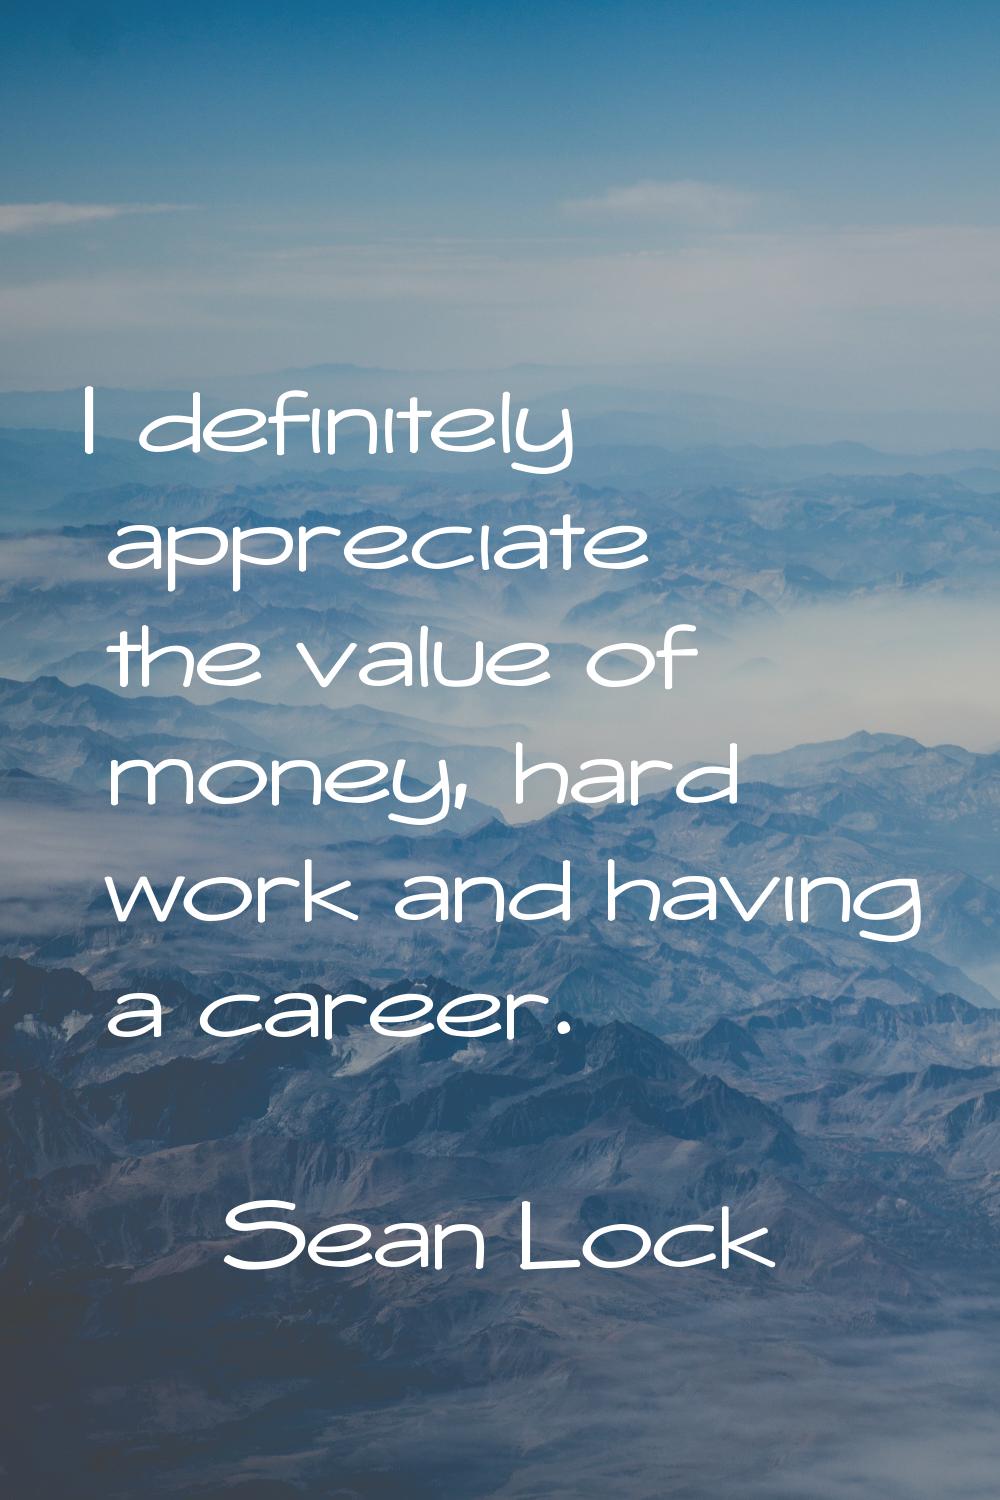 I definitely appreciate the value of money, hard work and having a career.